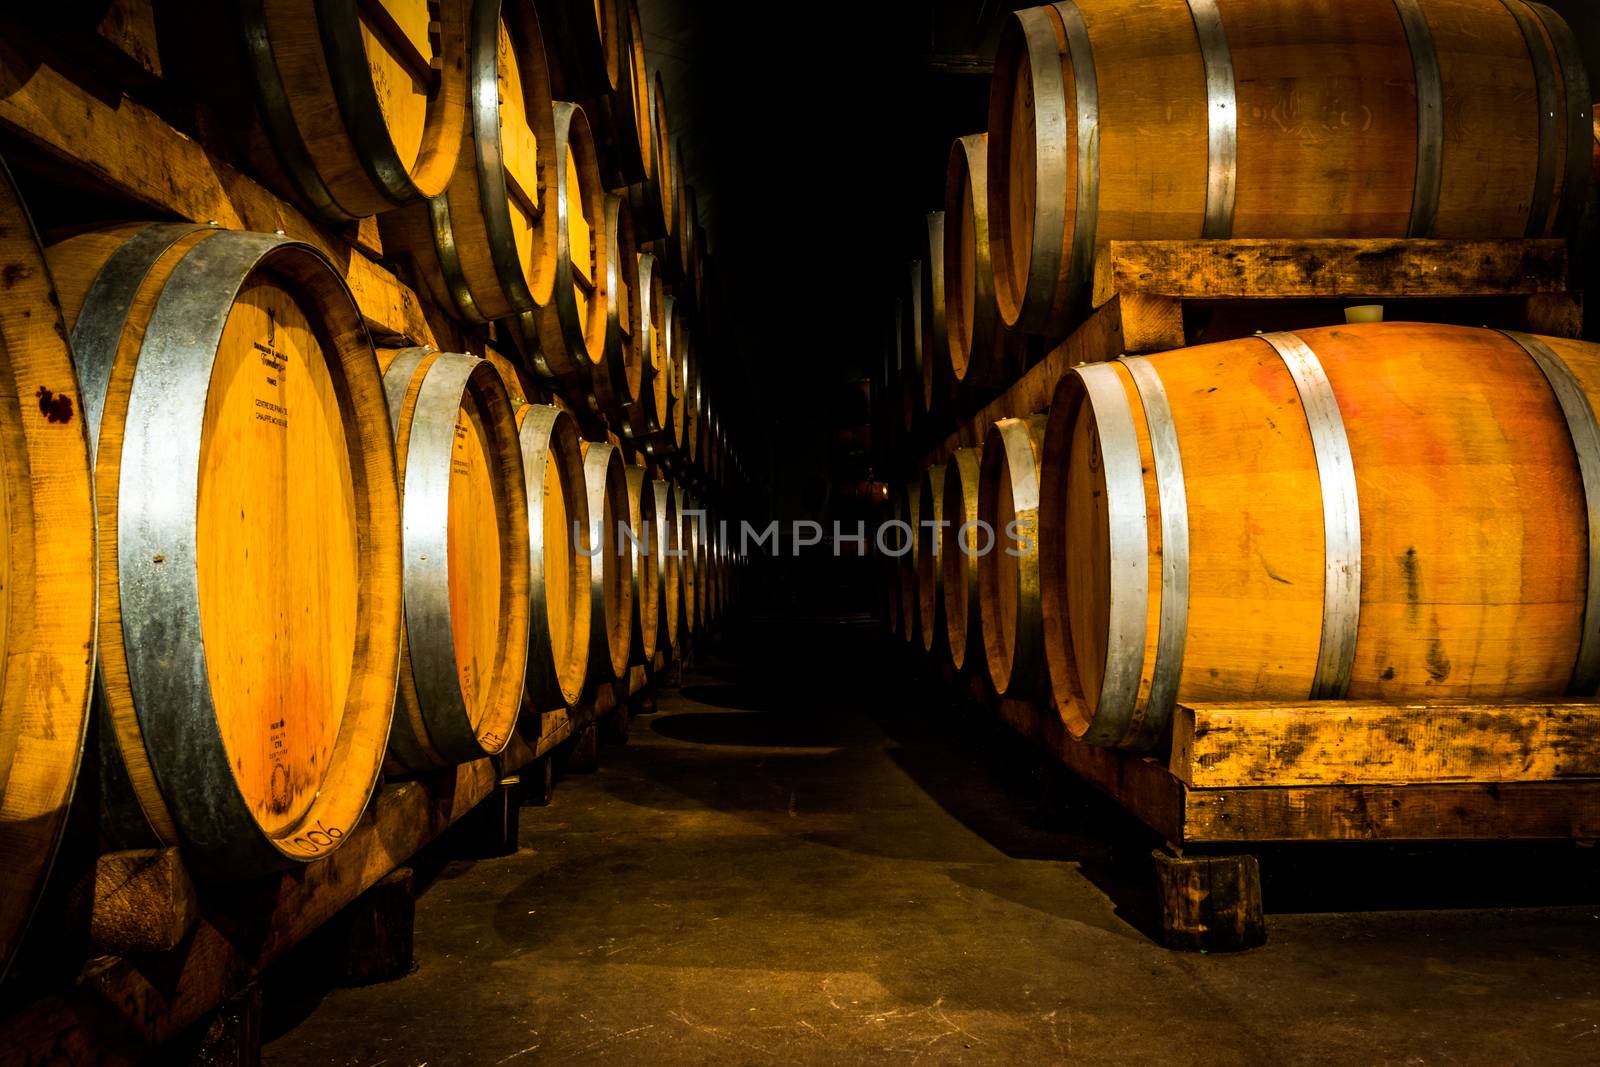 Yellow wine barrels in the cellar.